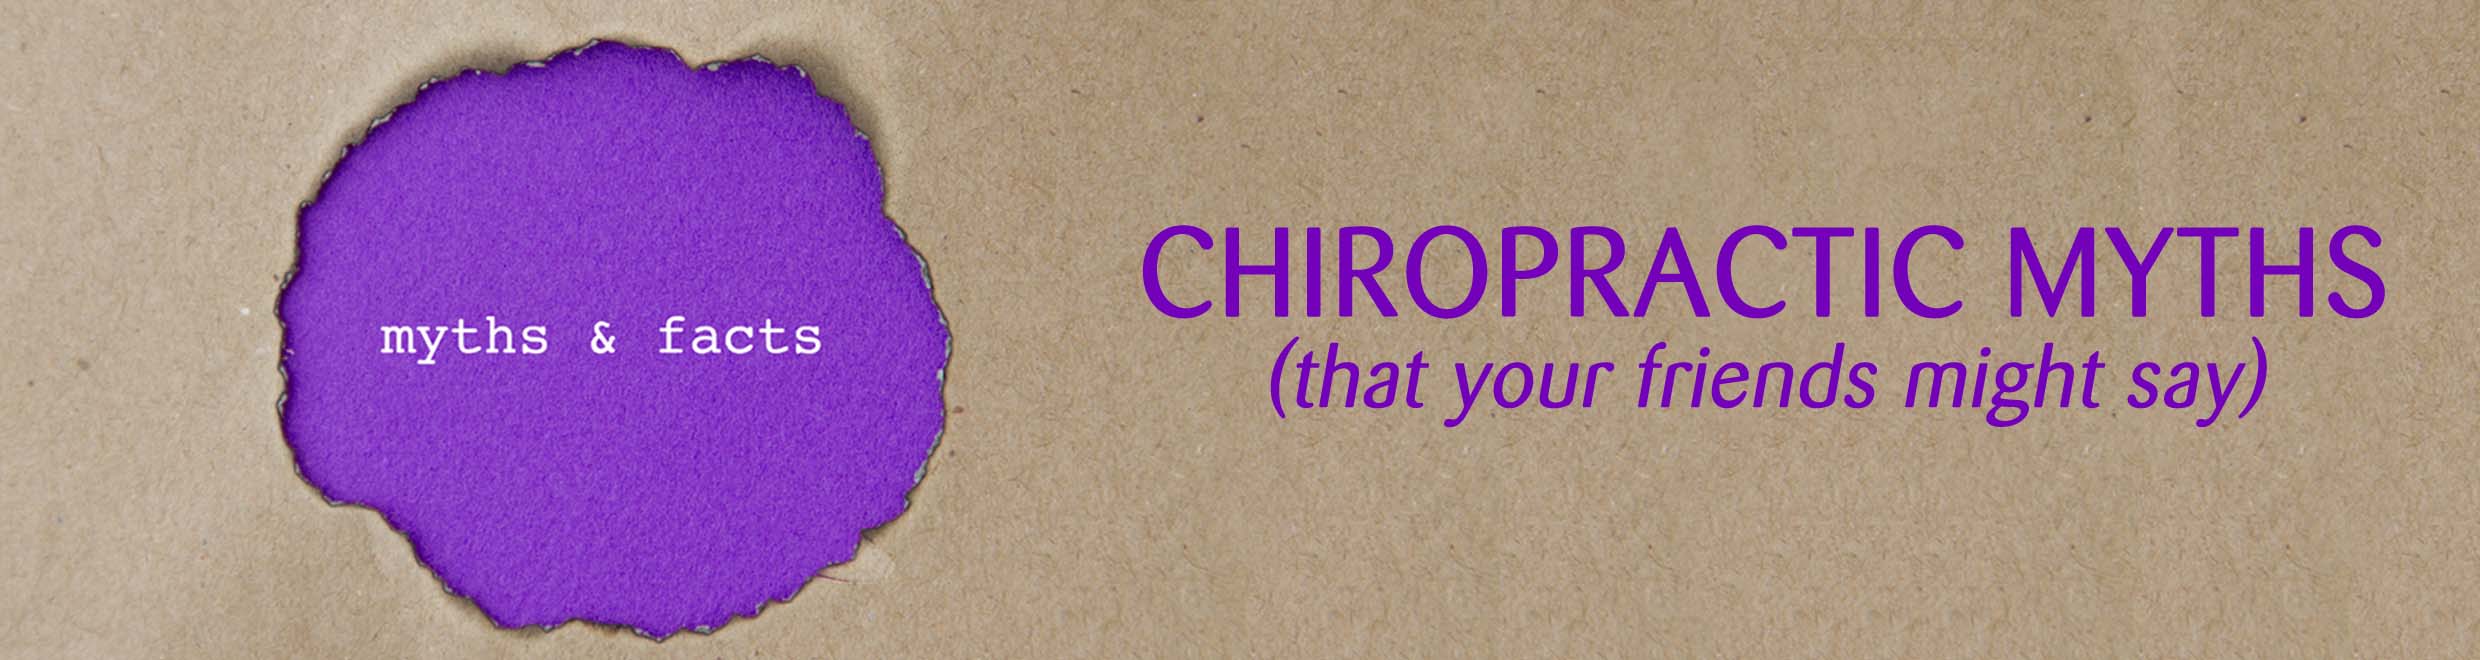 Nov 2018 - Chiropractic Myths